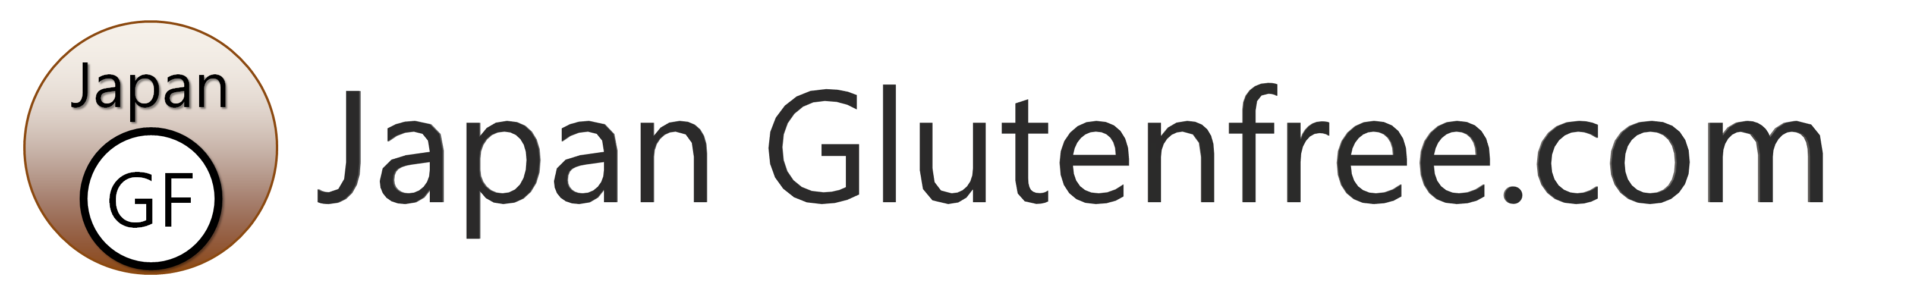 Japan Glutenfree.com